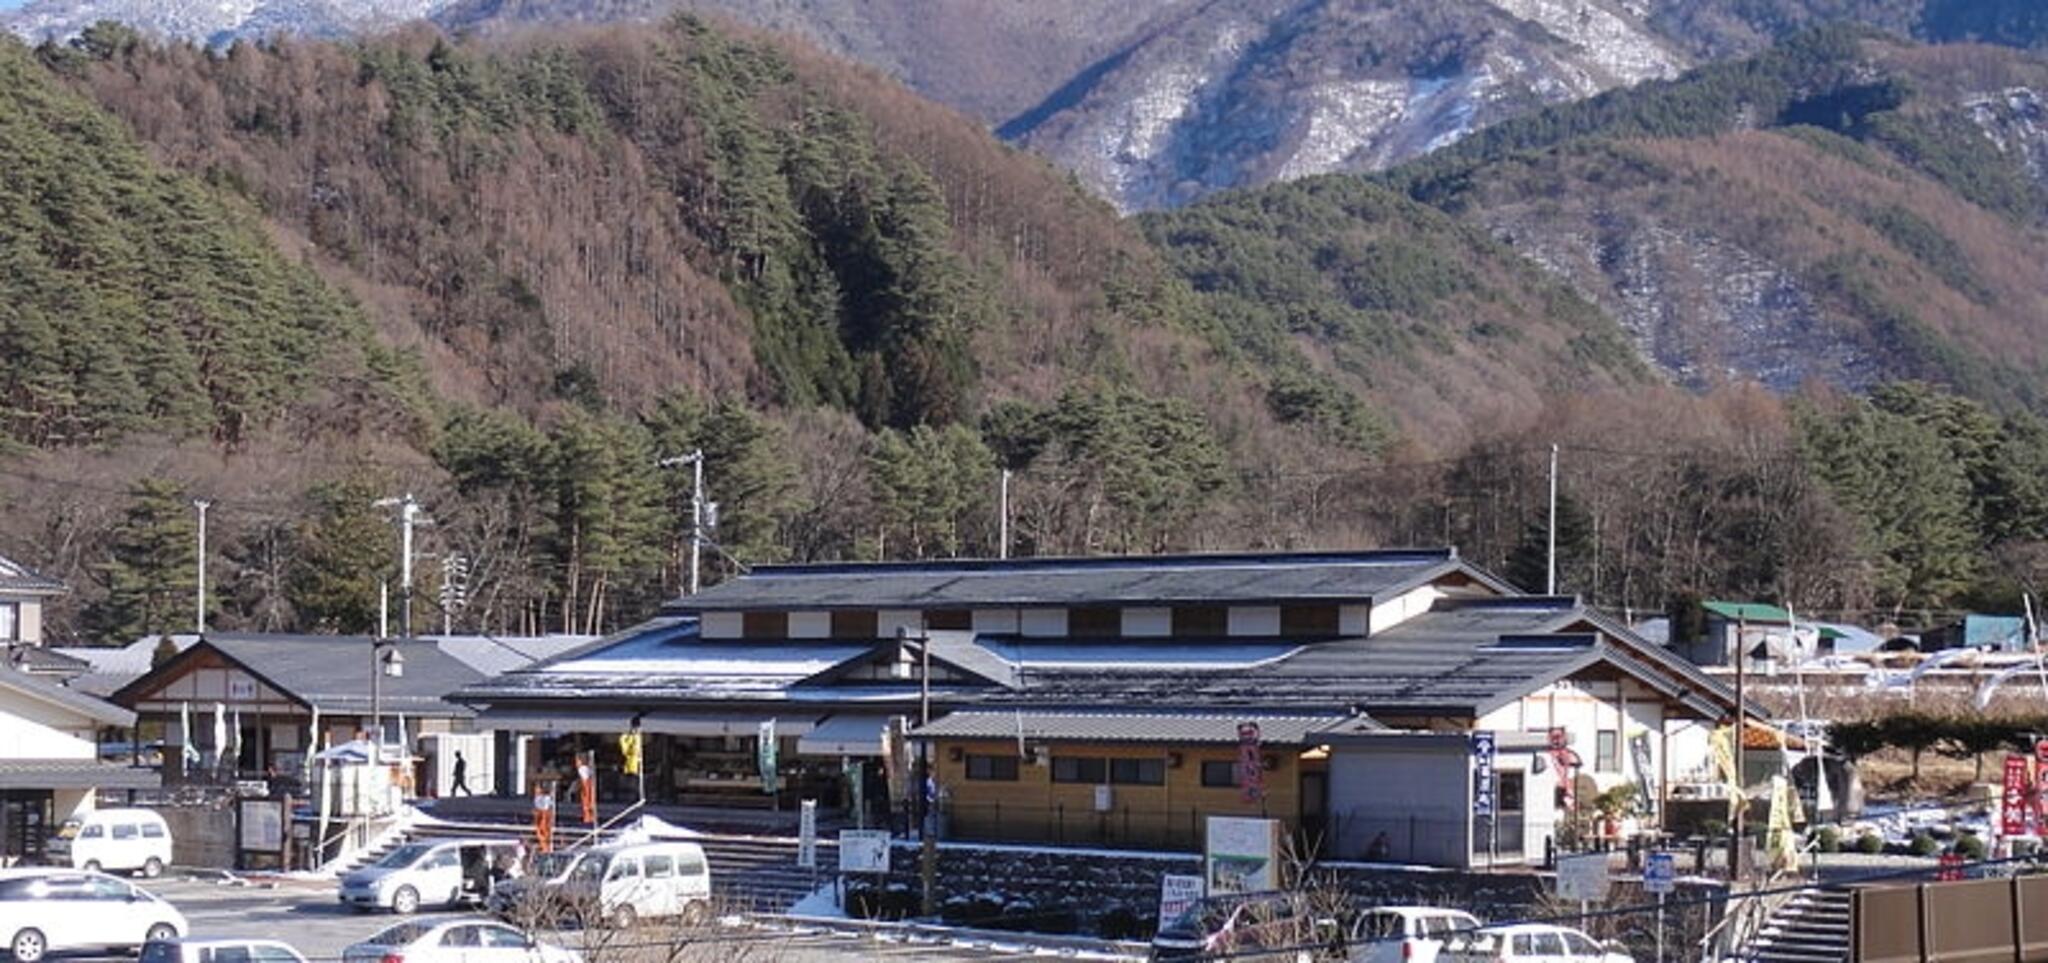 道の駅 日義木曽駒高原の代表写真1